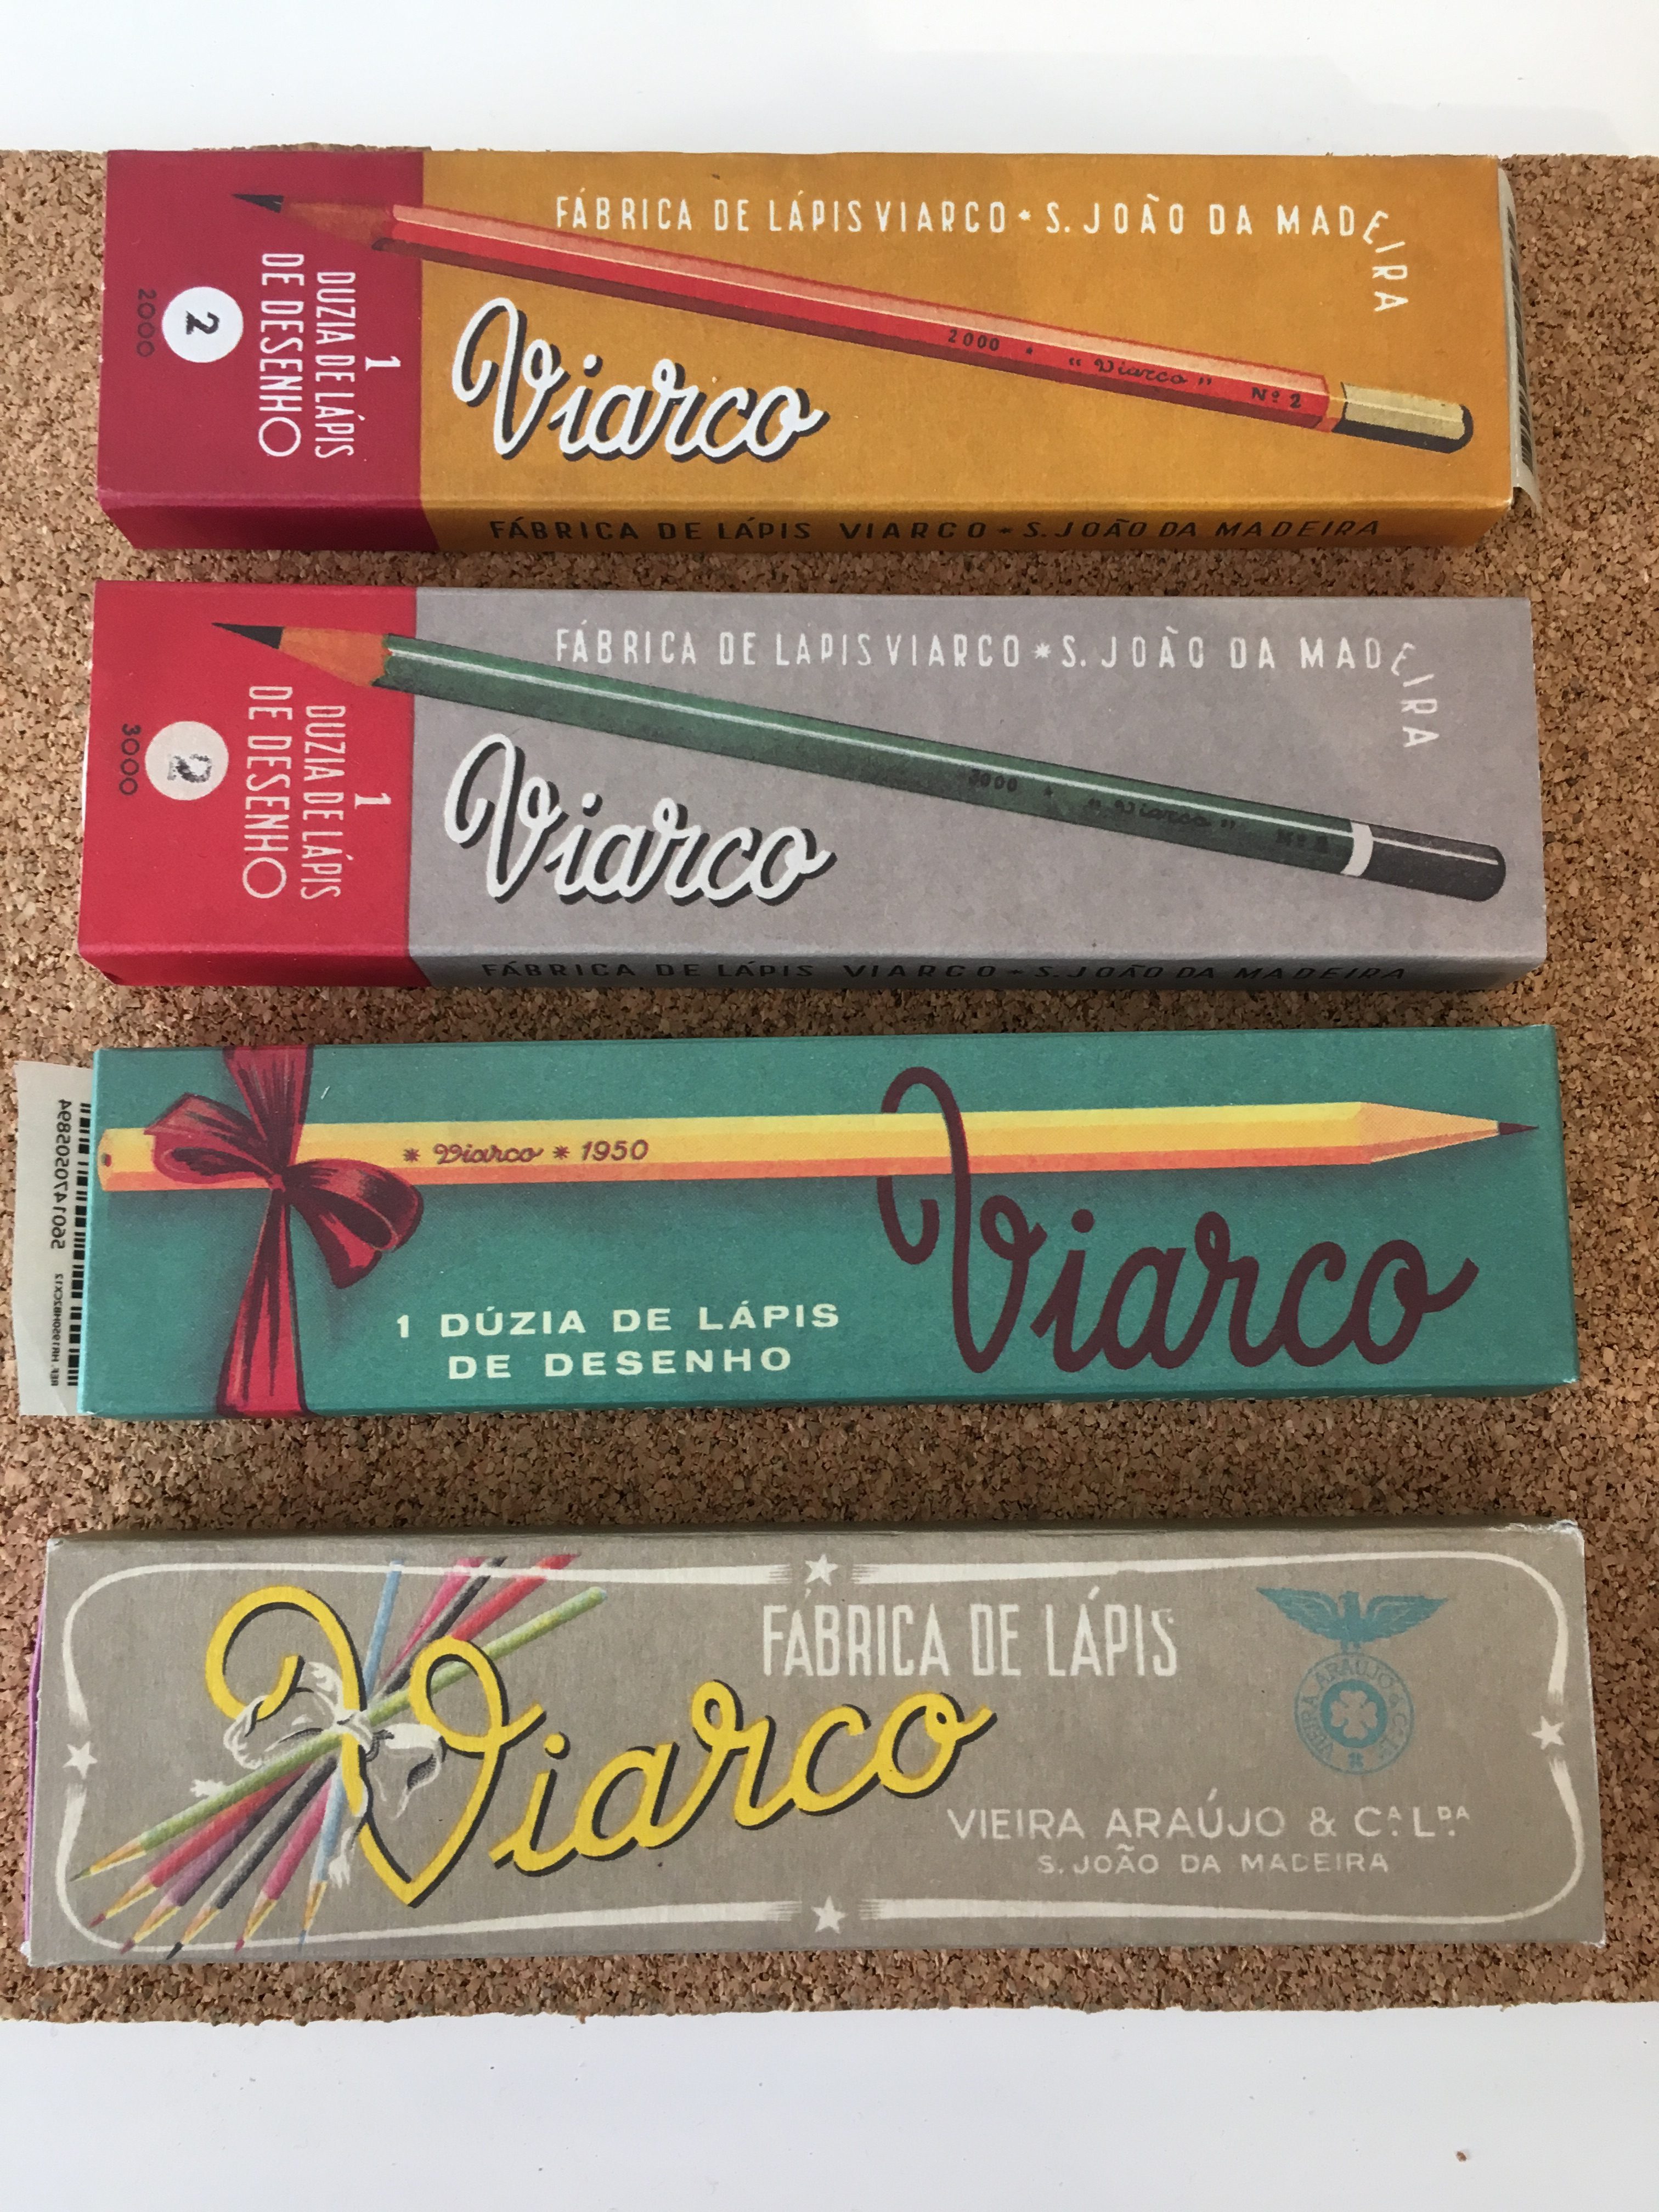 Viarco pencils are Caroline's favorite- CW Pencil Enterprises